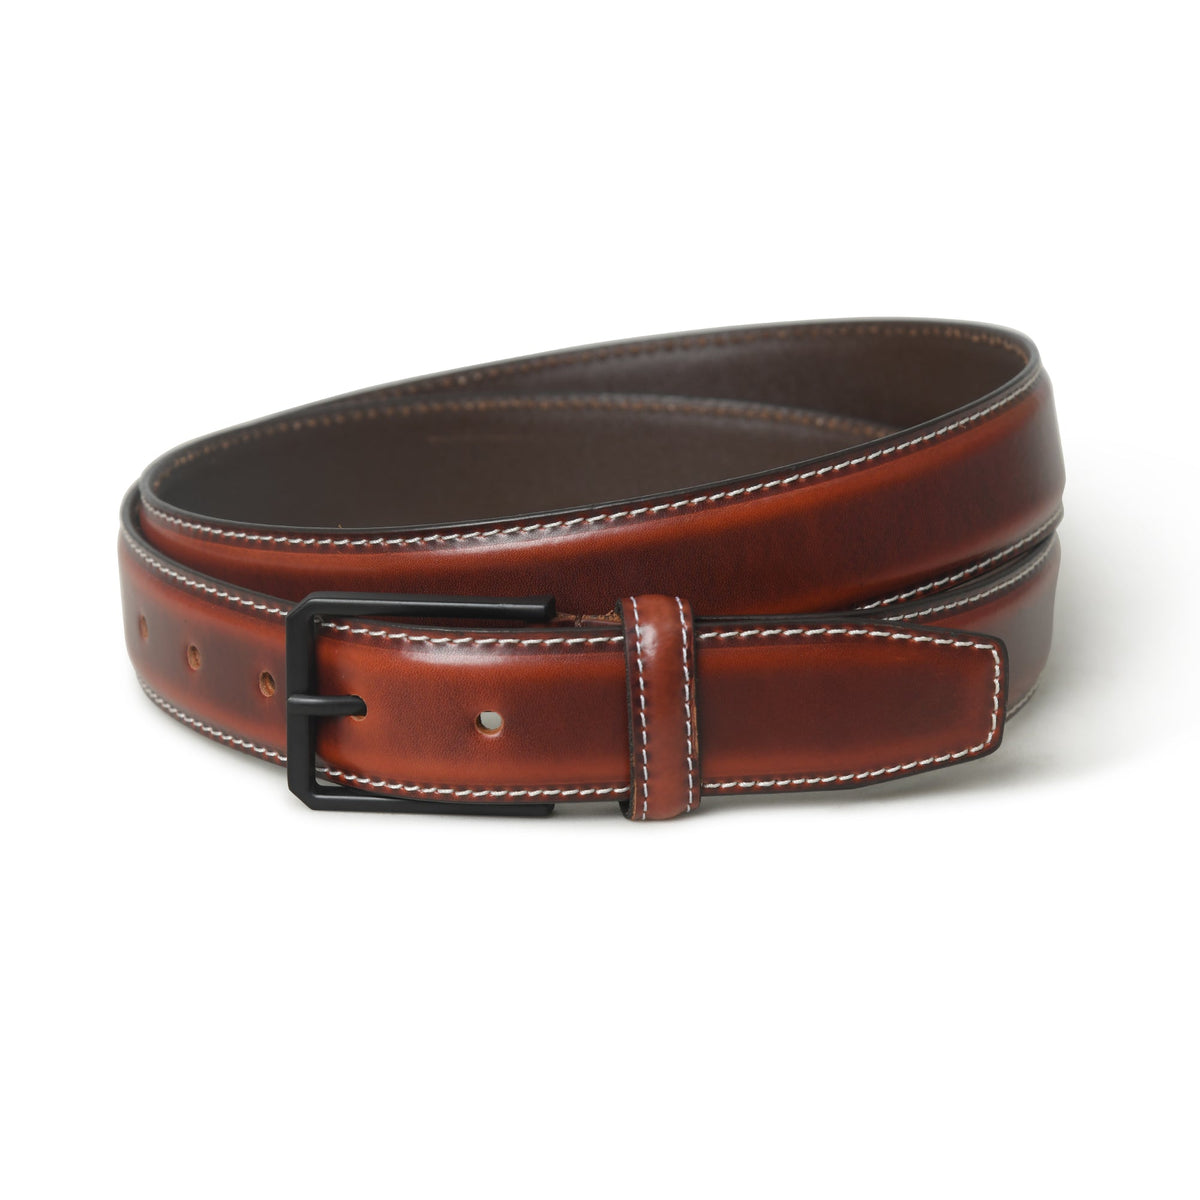 Shop Leather Belt For Men At The Best Price Online | MaheTri